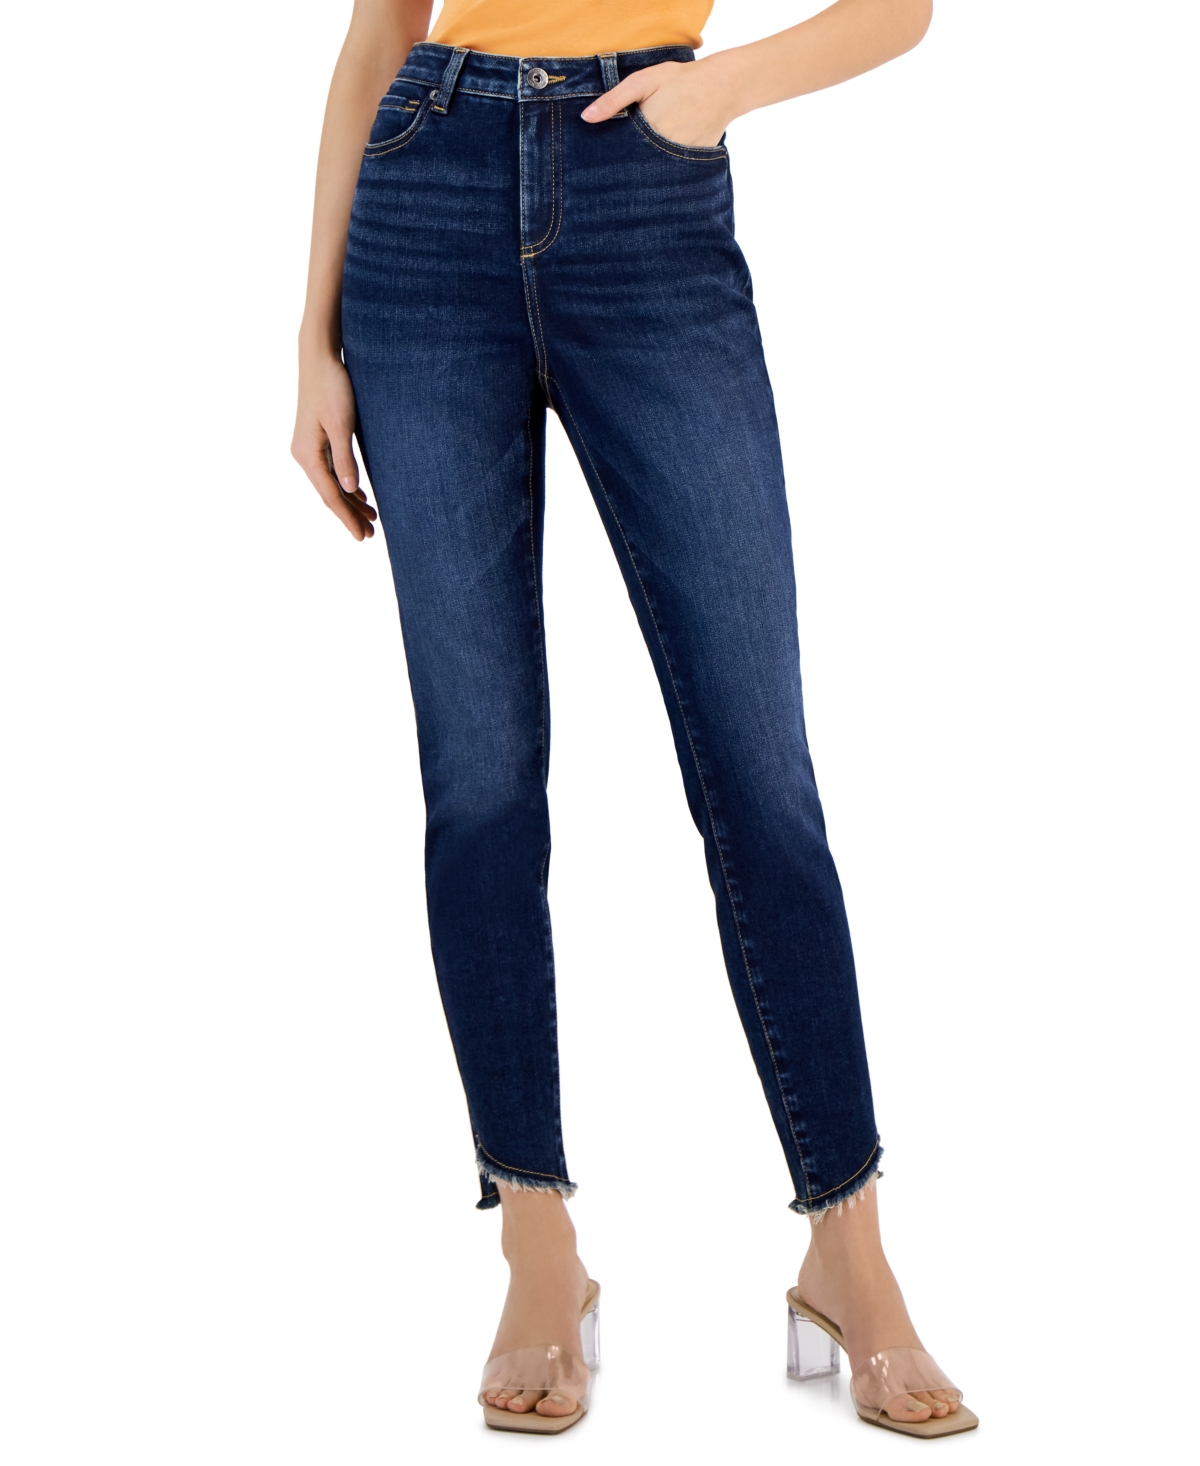  Inc International Concepts Women's Curvy Angled-Hem Skinny Jeans, Created for Macy's